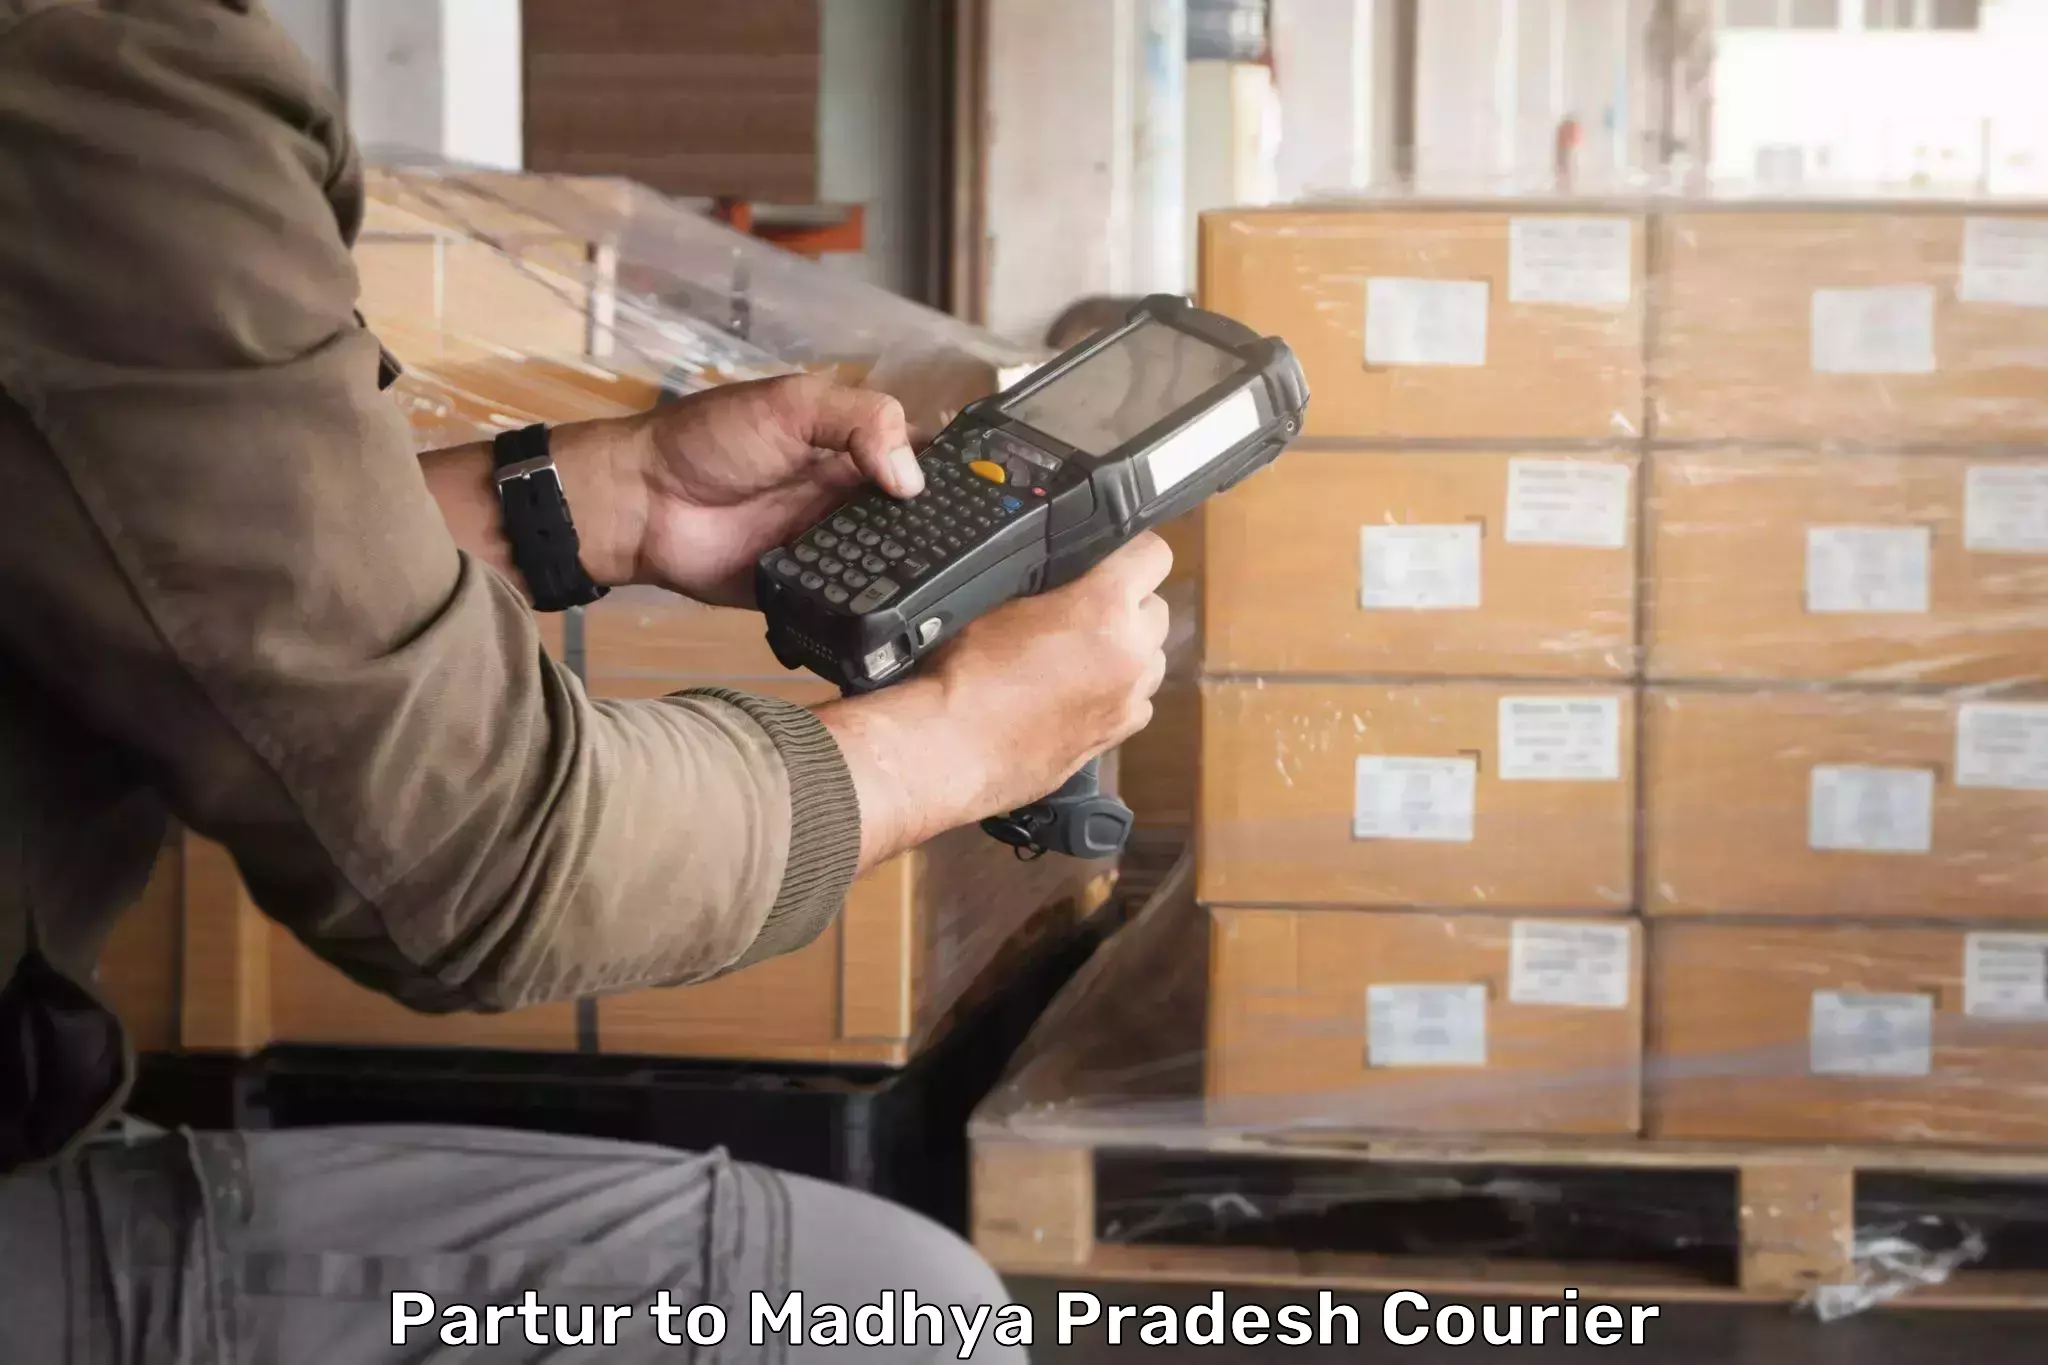 Corporate courier solutions Partur to Dindori